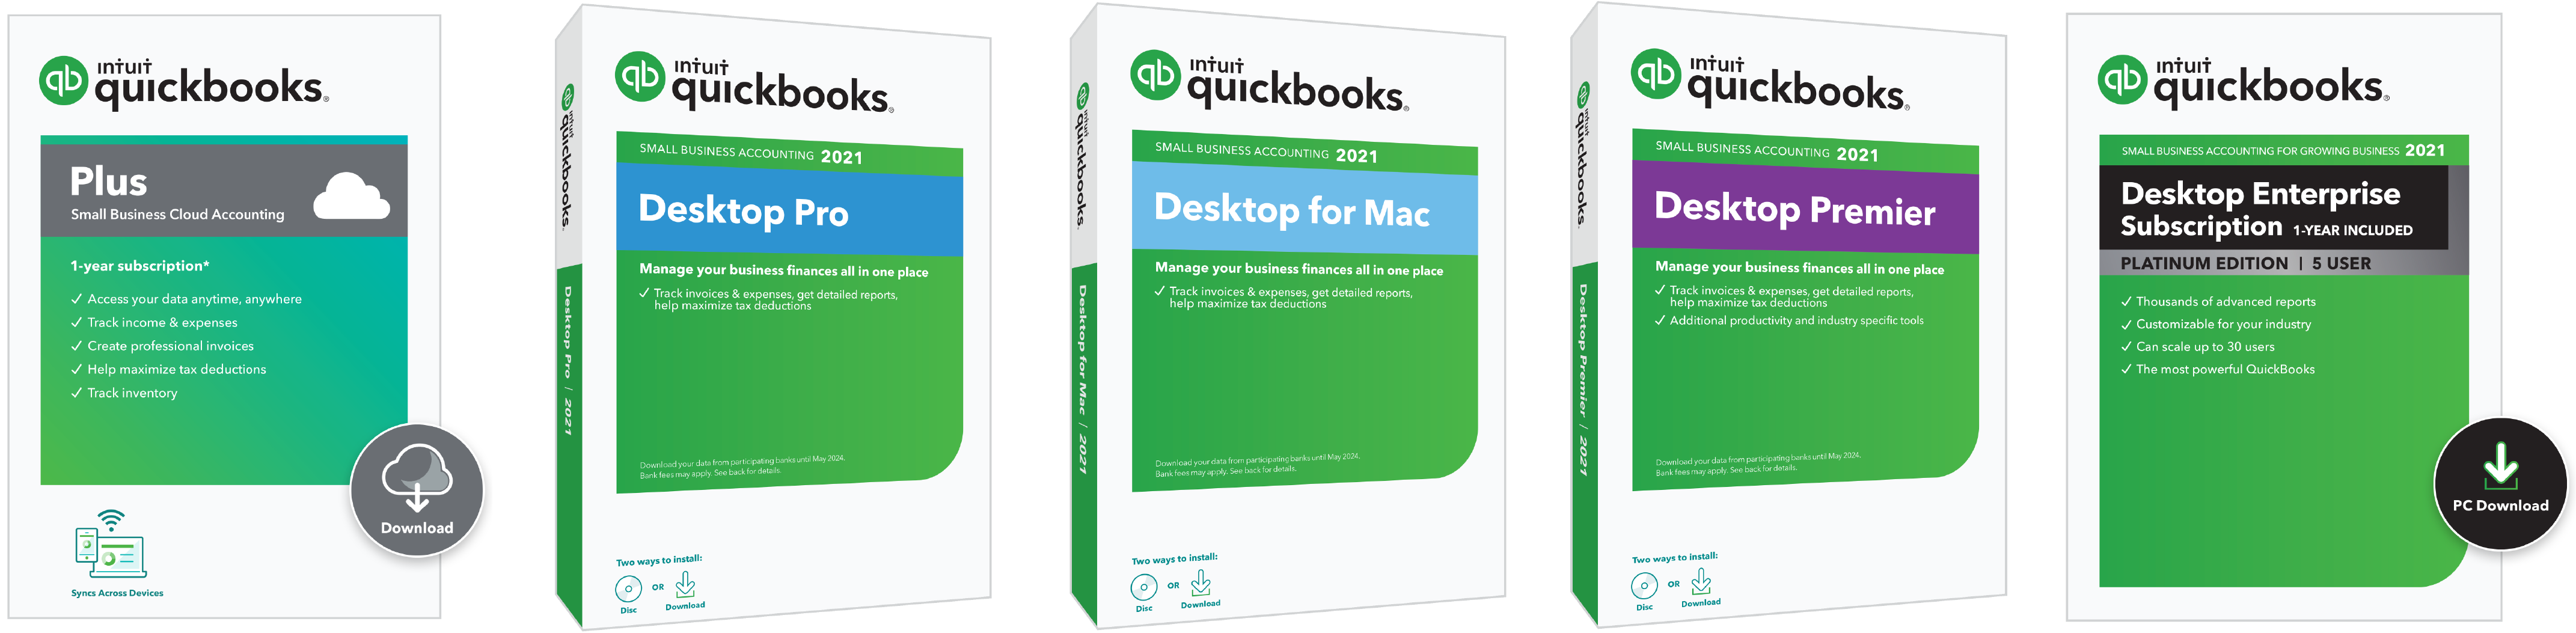 best buy quickbooks for mac